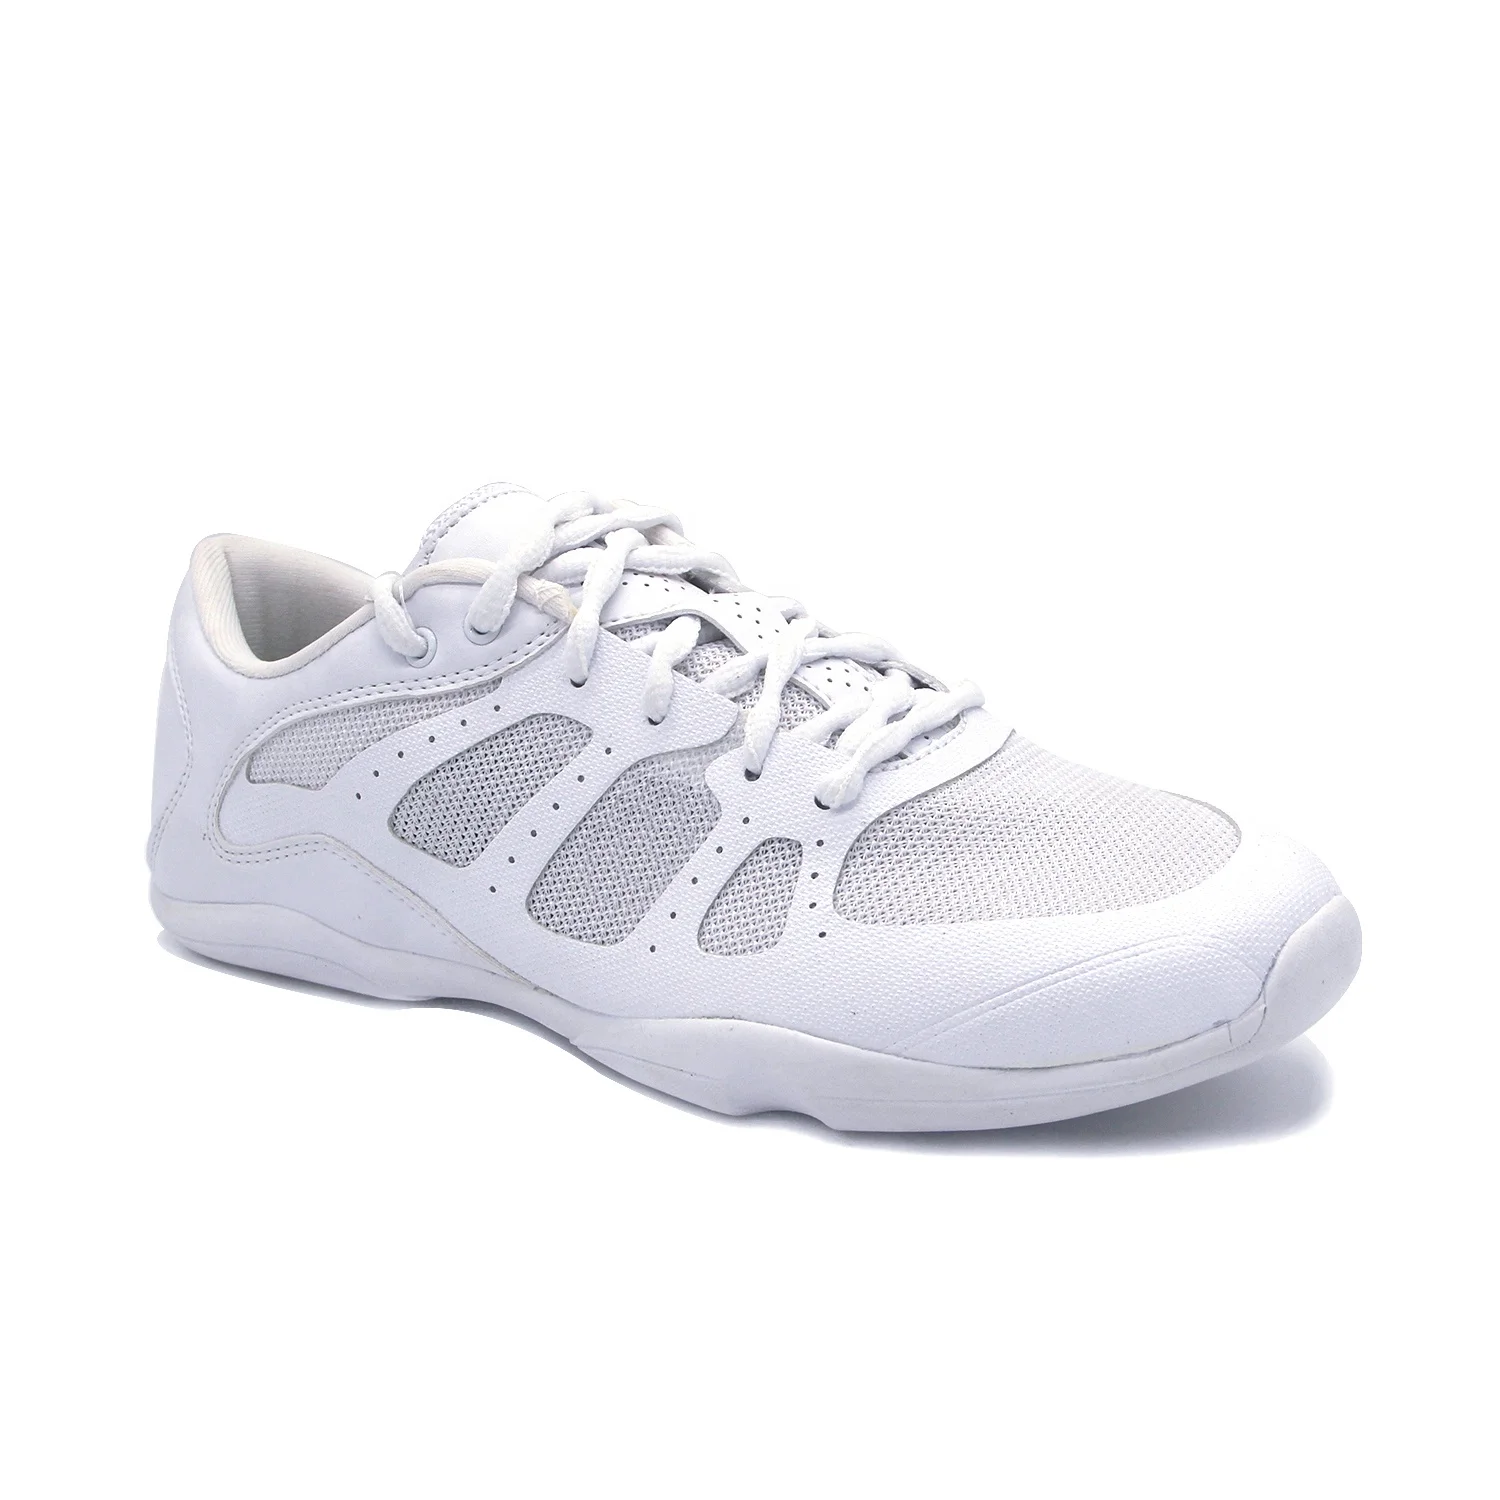 Factory Custom White Leather Fashion Mesh Cheering Dance Sport Shoe Flexible Gymnastic Cheer Cheerleading Shoes